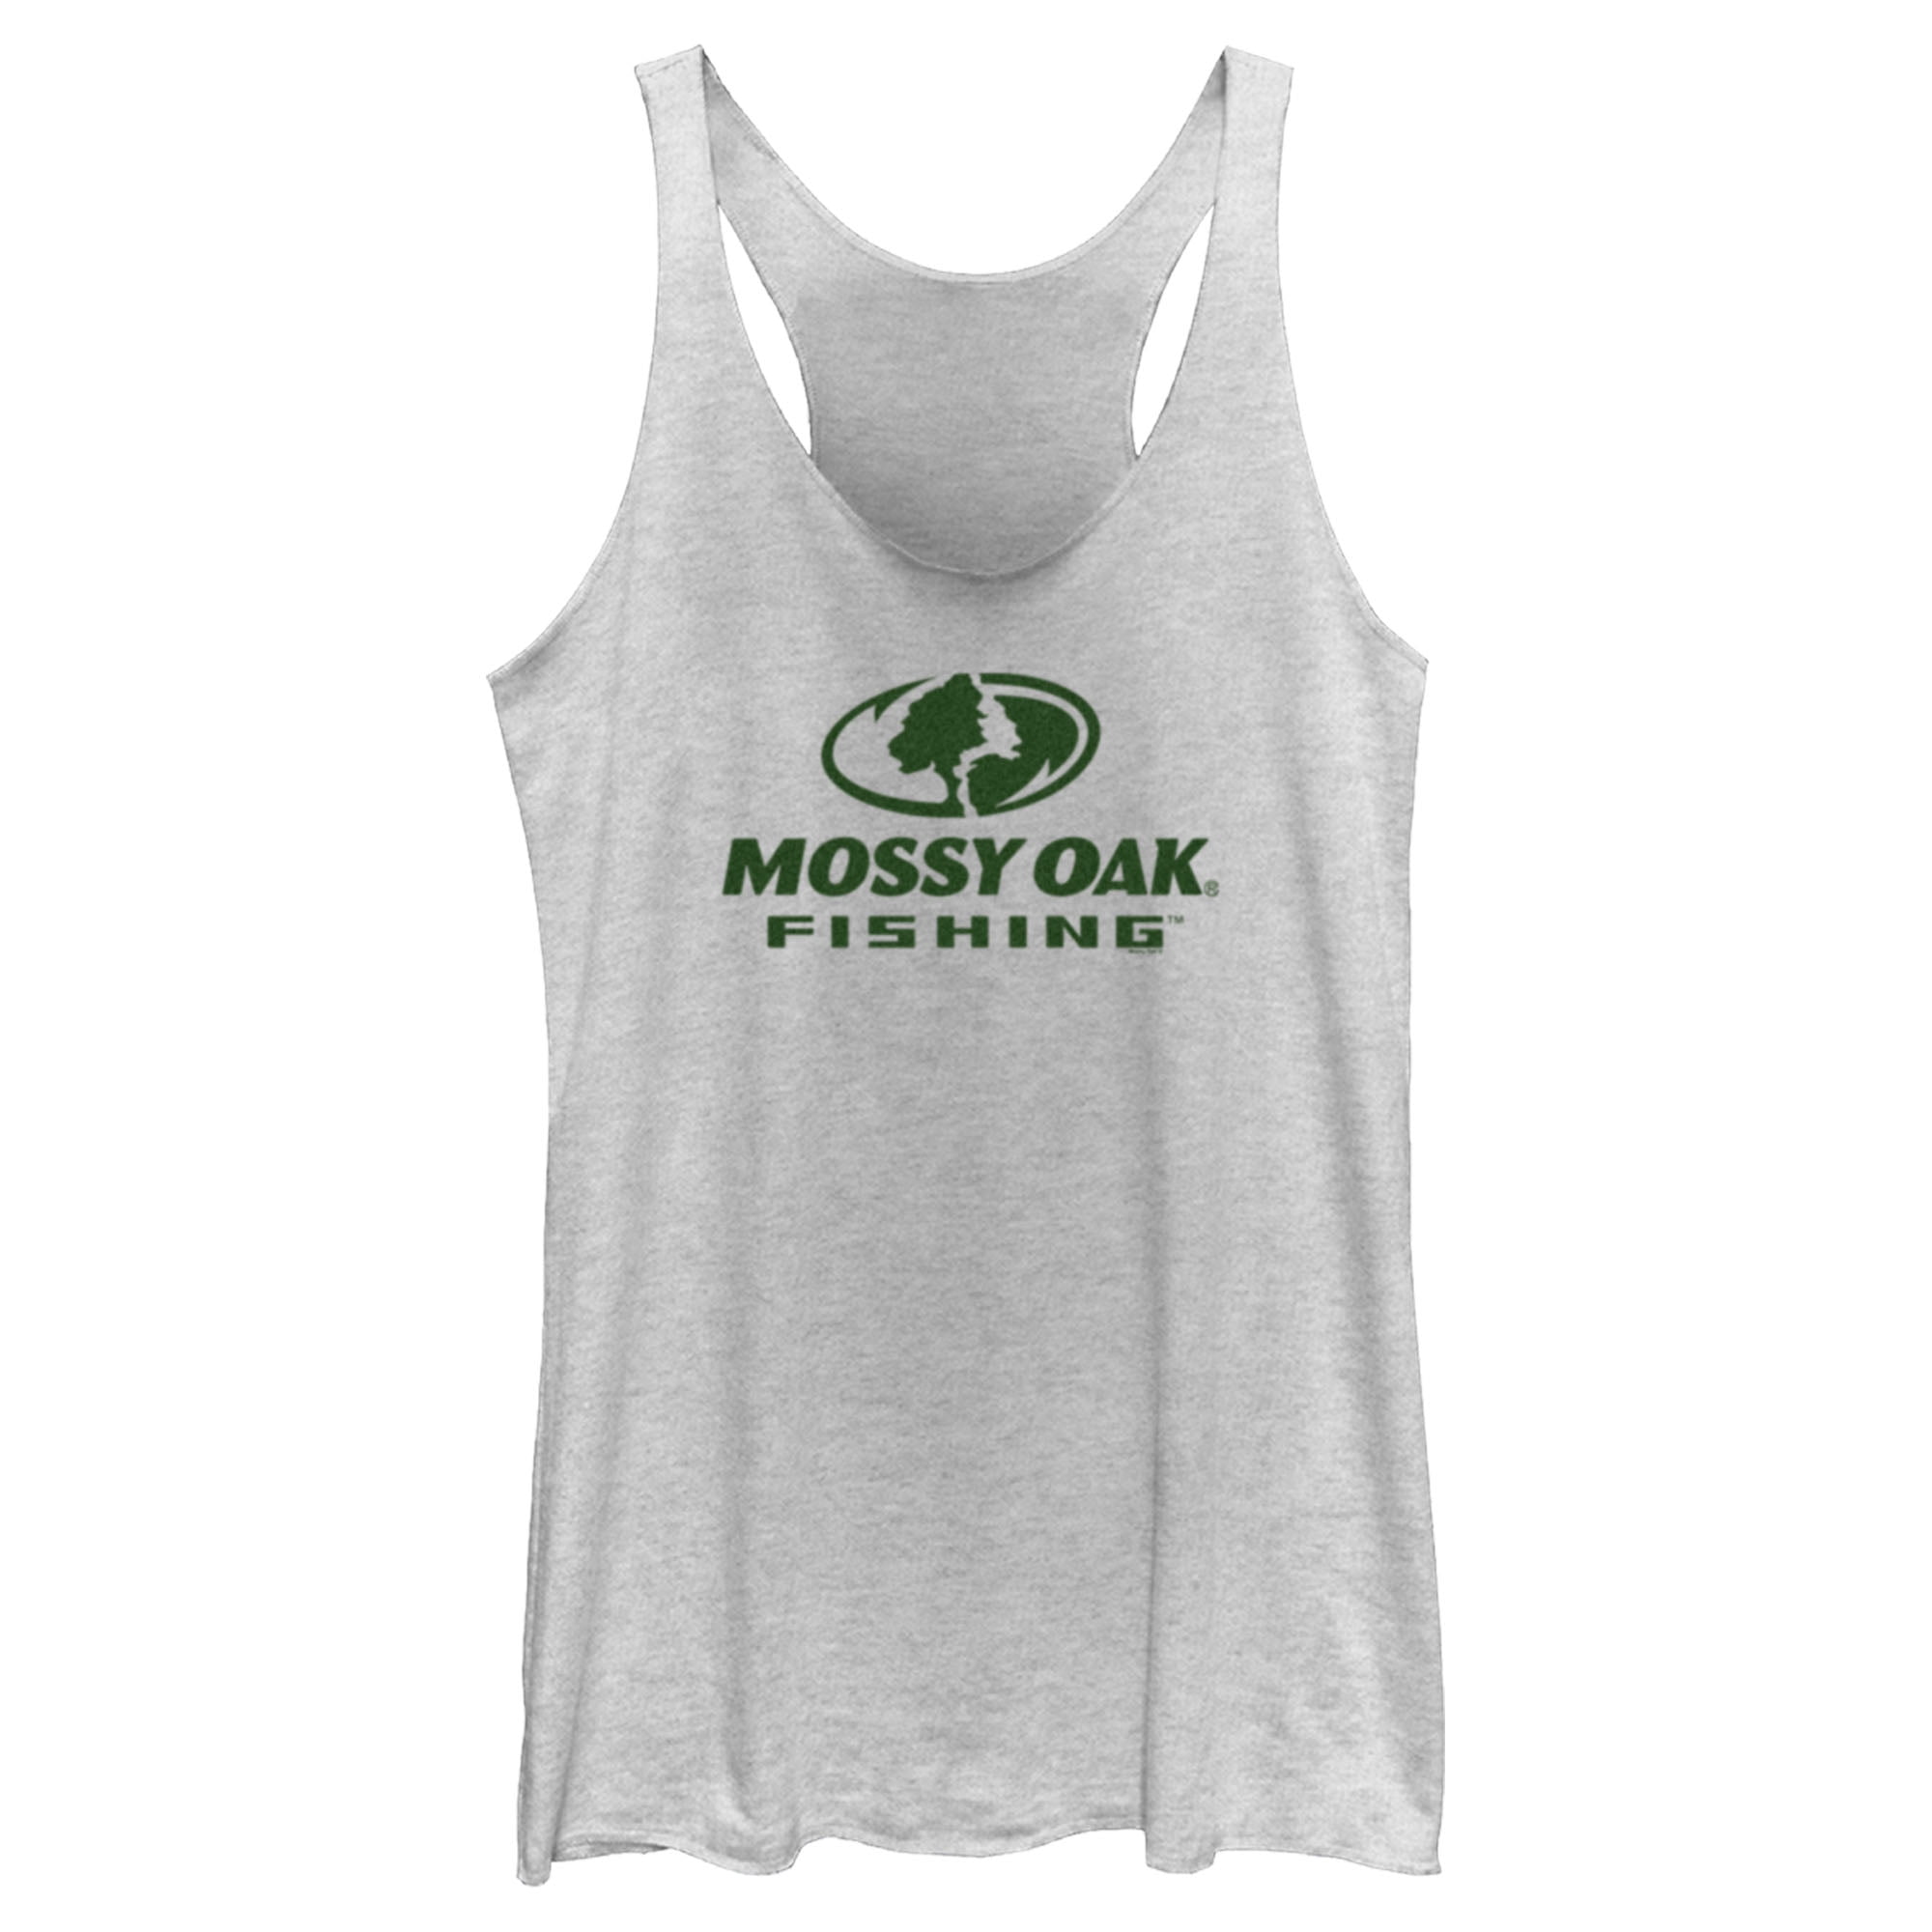 Women's Mossy Oak Fishing Logo Racerback Tank Top White Heather Medium